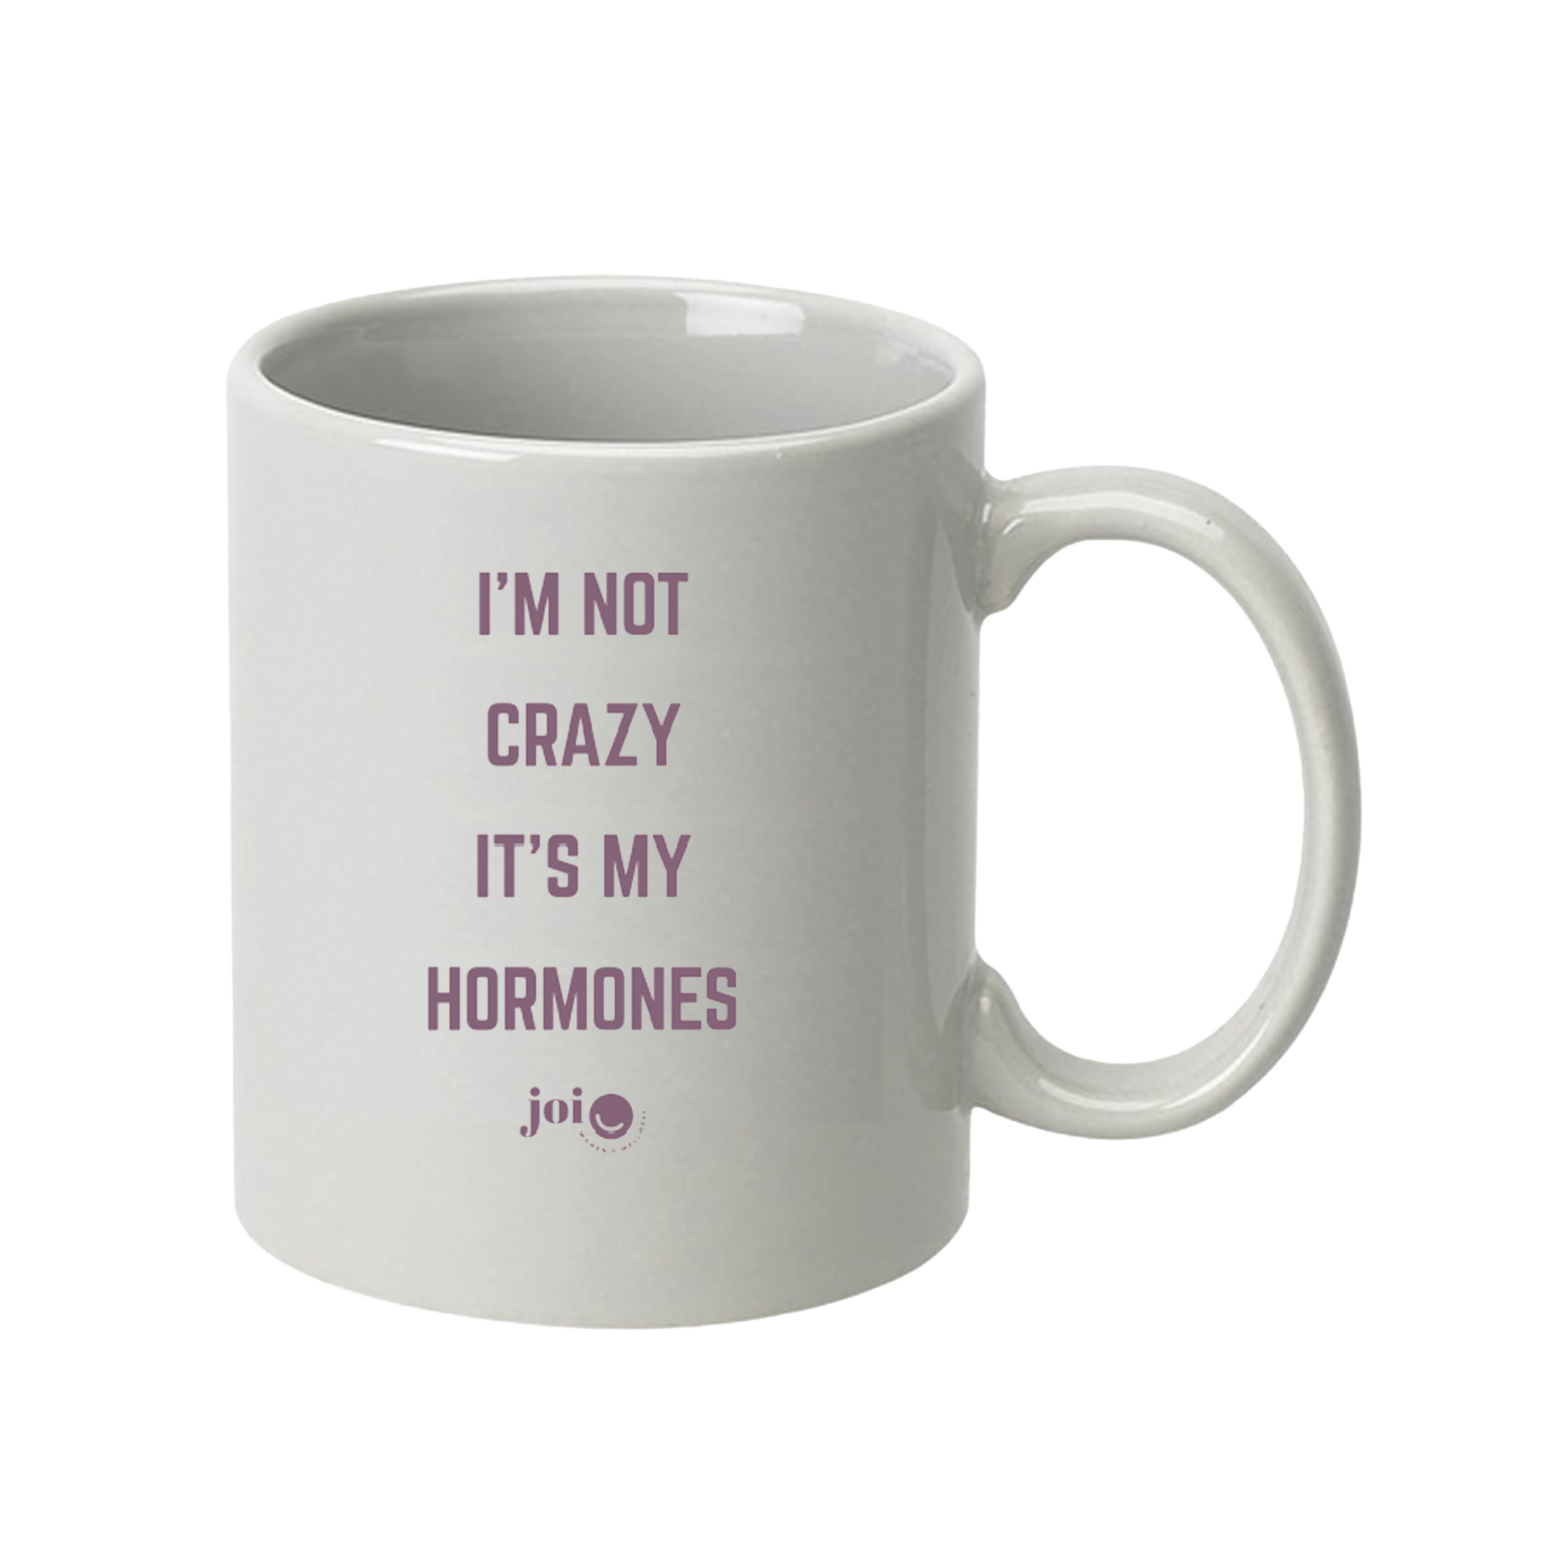 Joi Hormones Coffee Mug